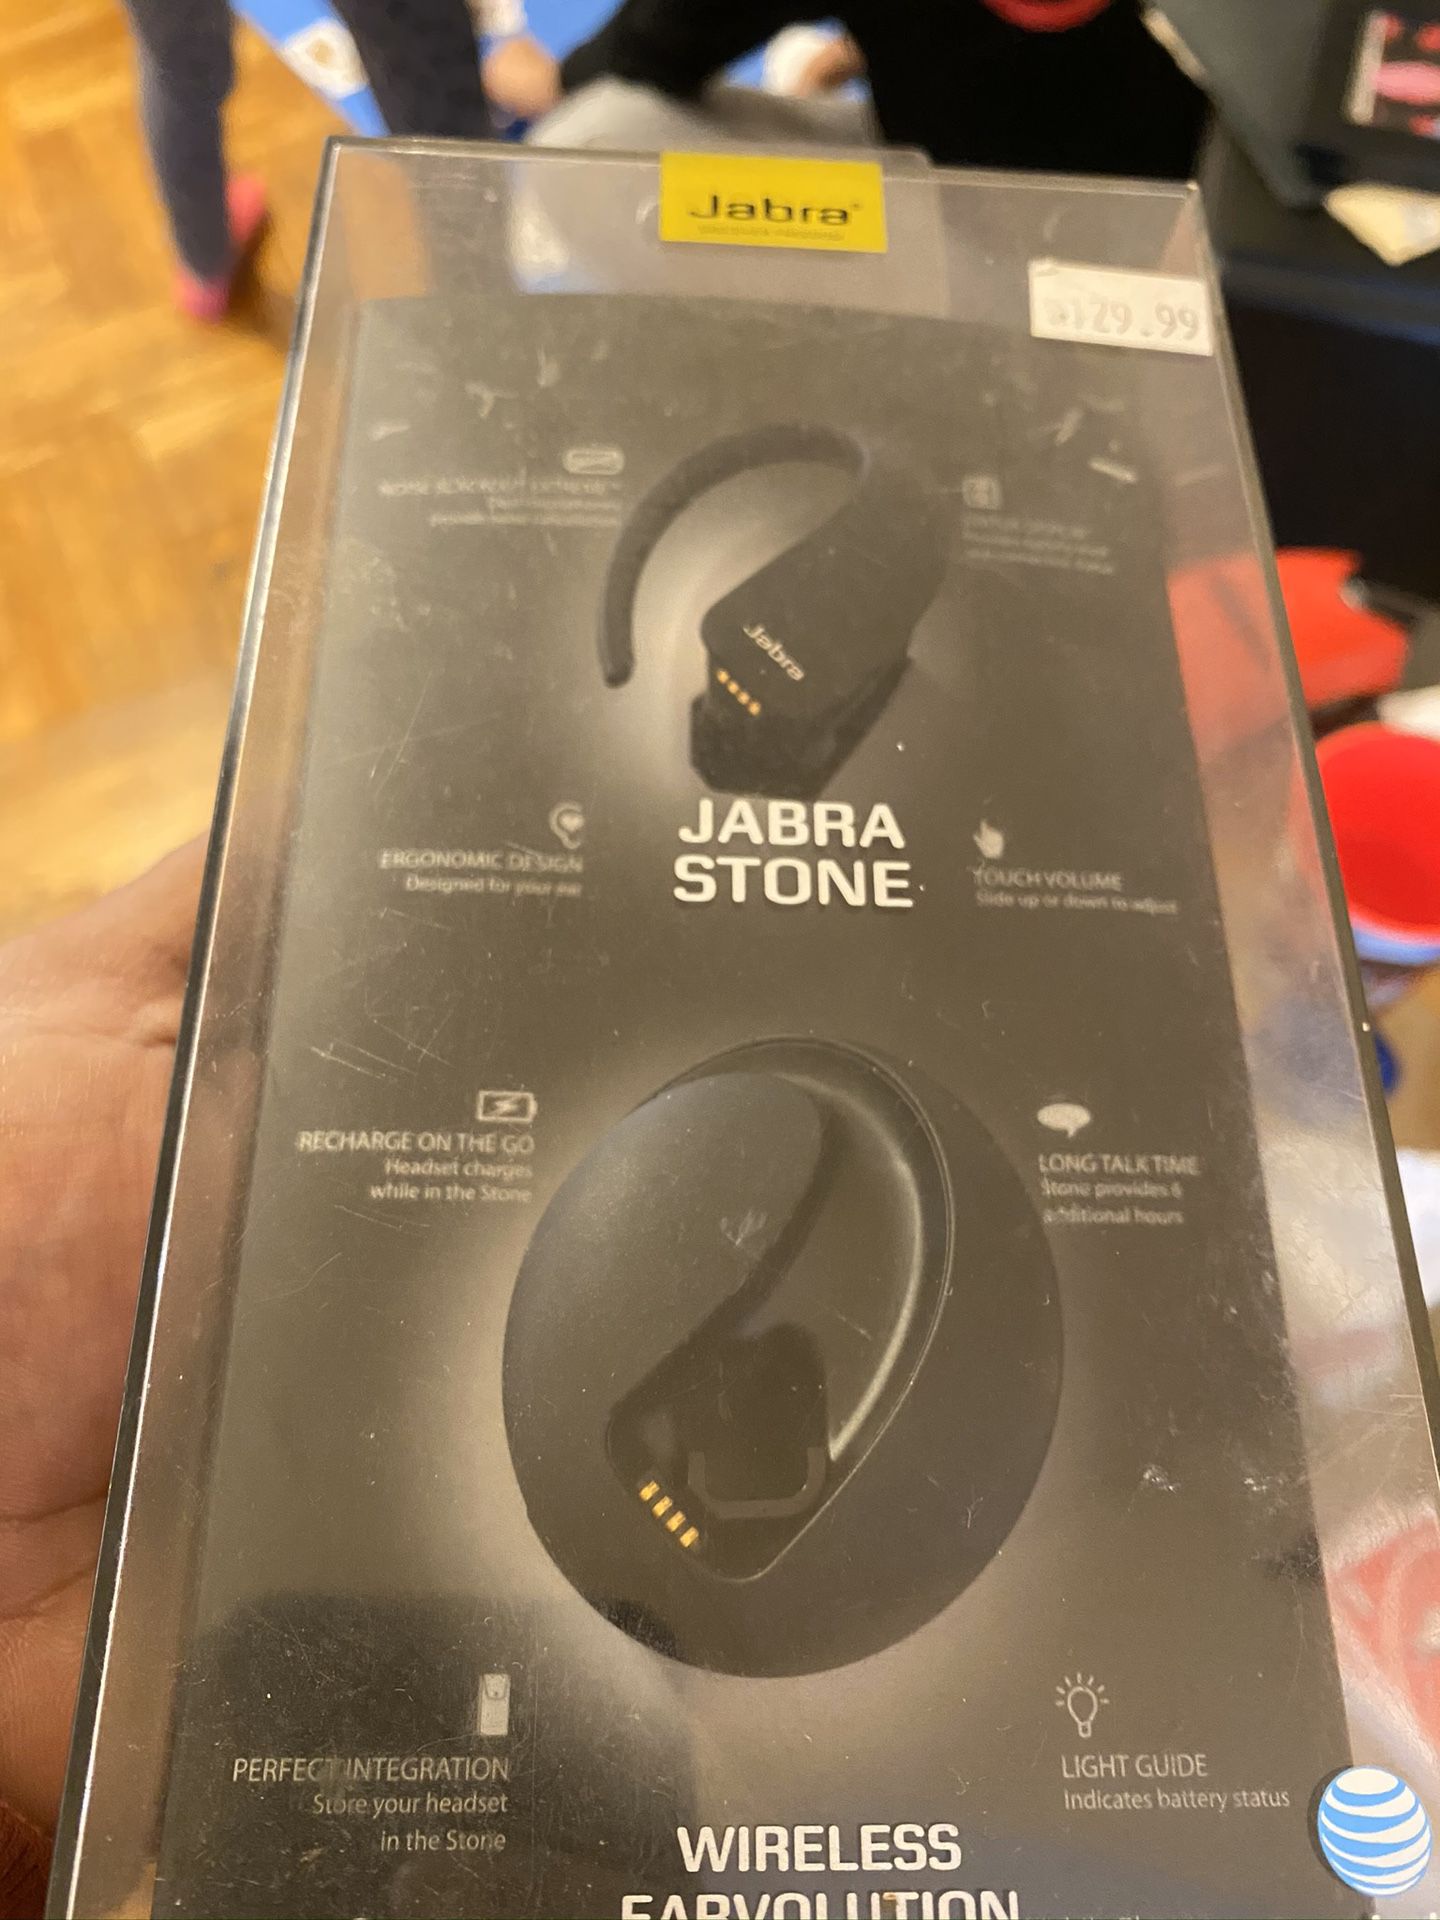 Jabra stone Bluetooth